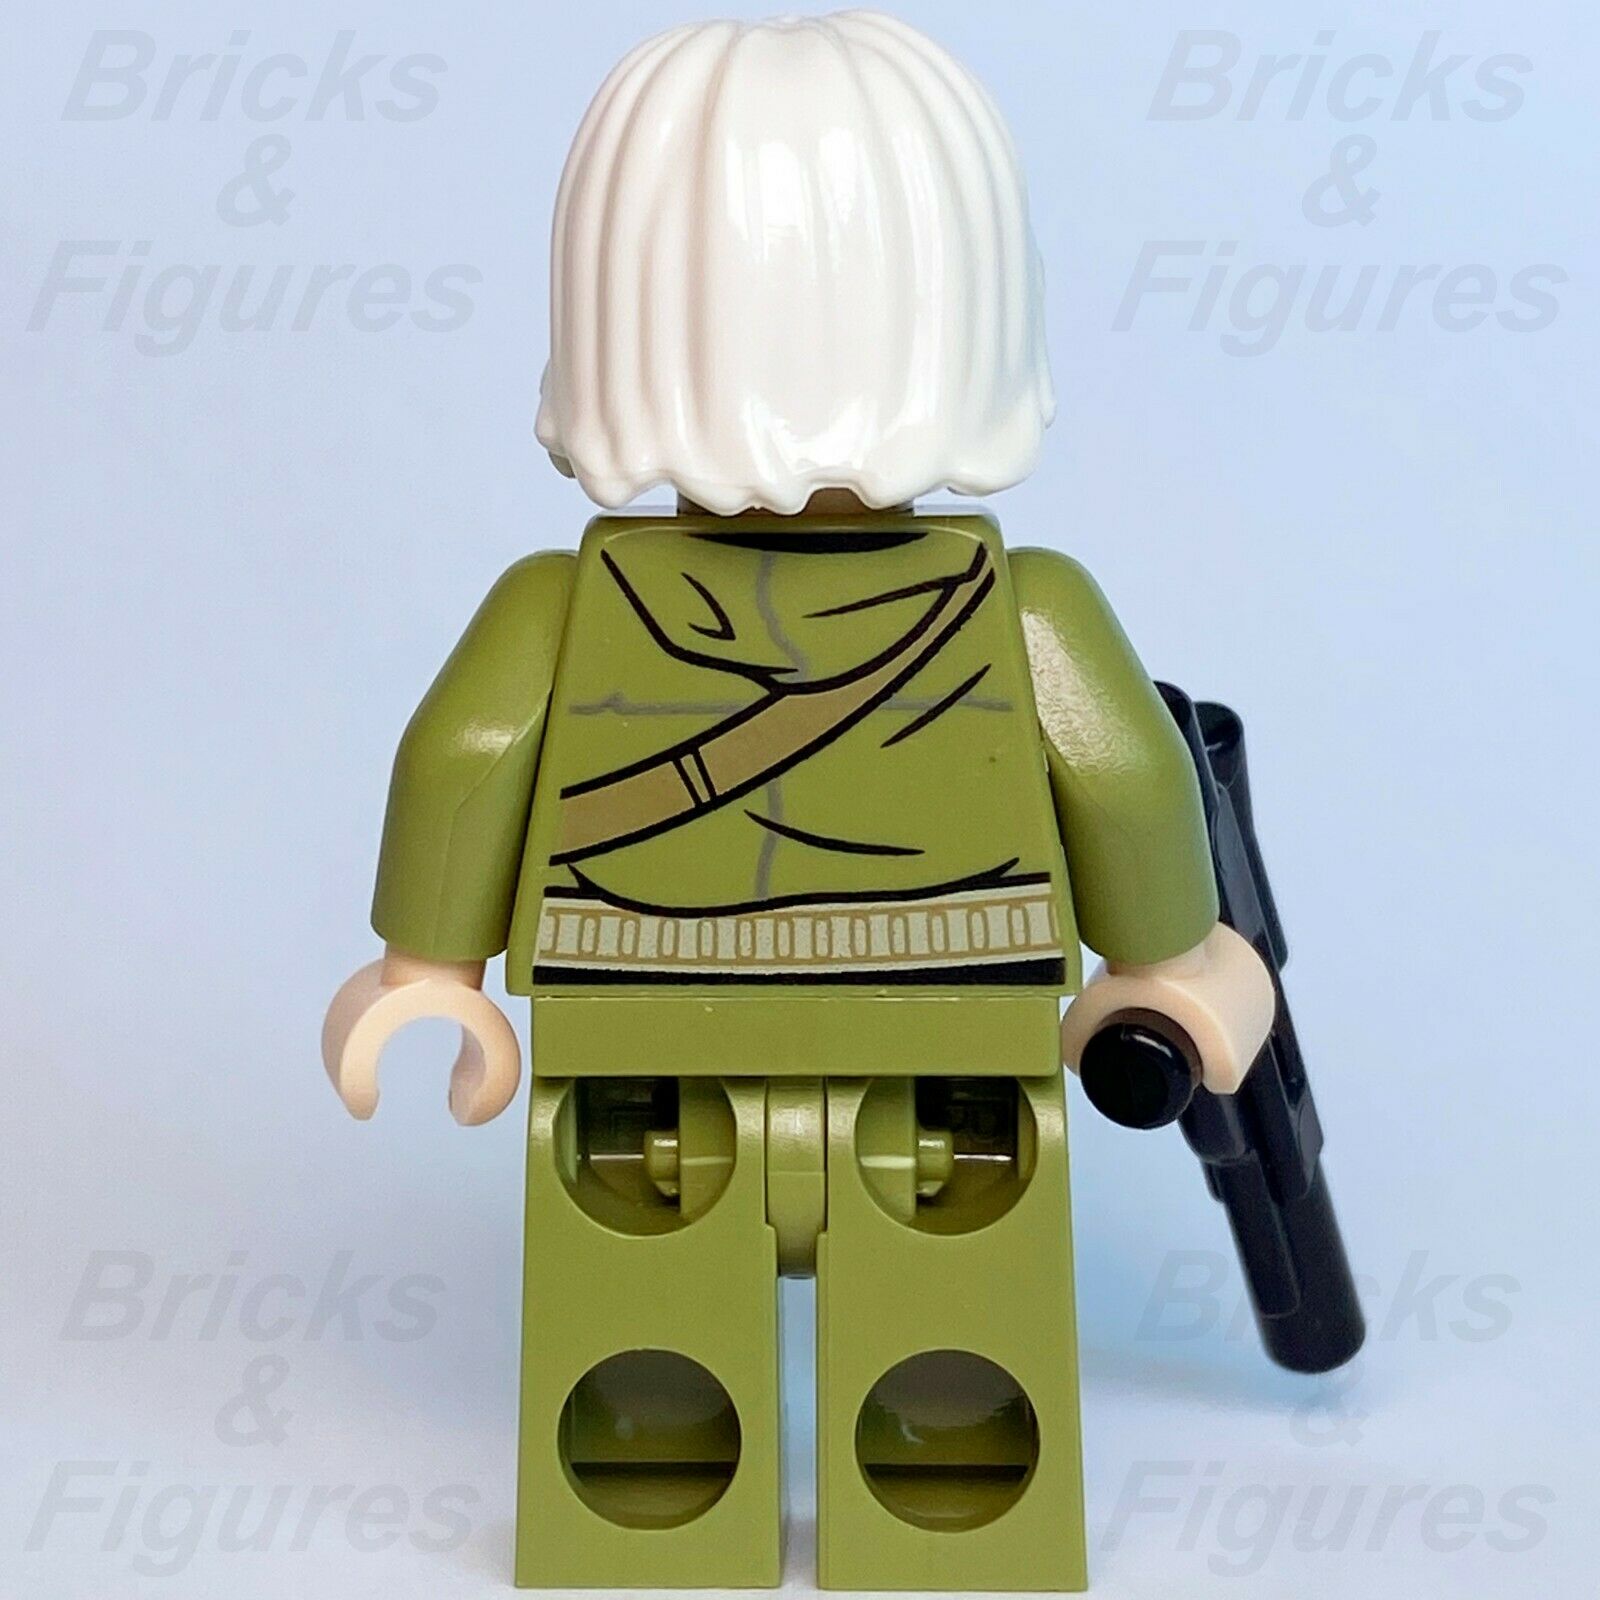 Star Wars LEGO Admiral Ematt Resistance The Last Jedi Minifigure 75202 sw0891 - Bricks & Figures